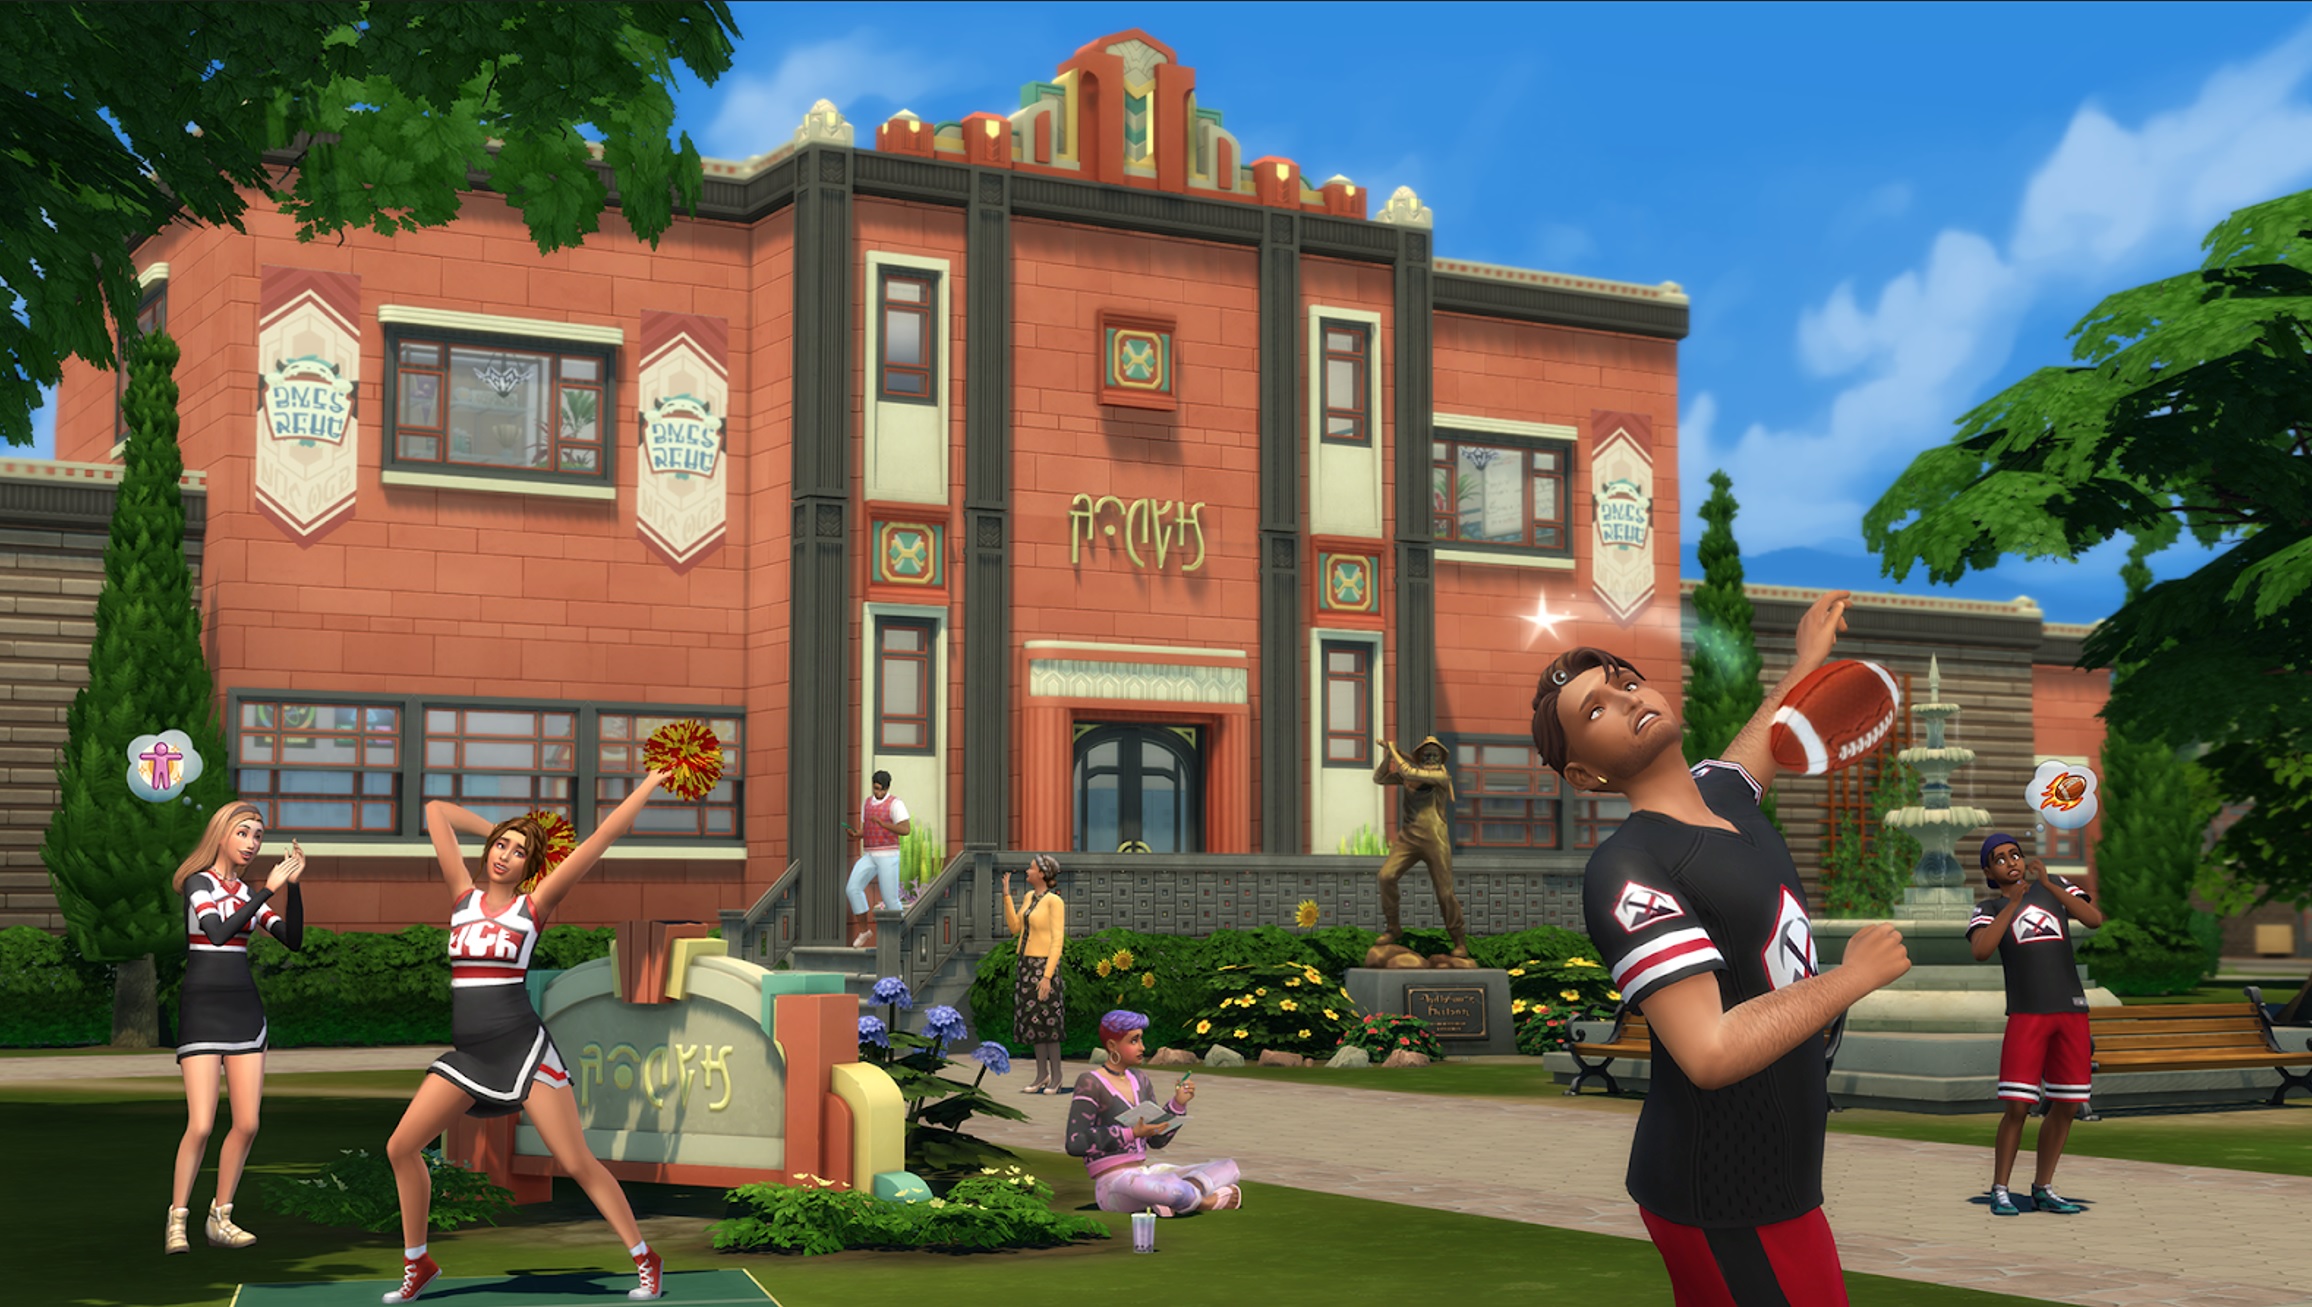 The Sims 4 Vita da Liceali